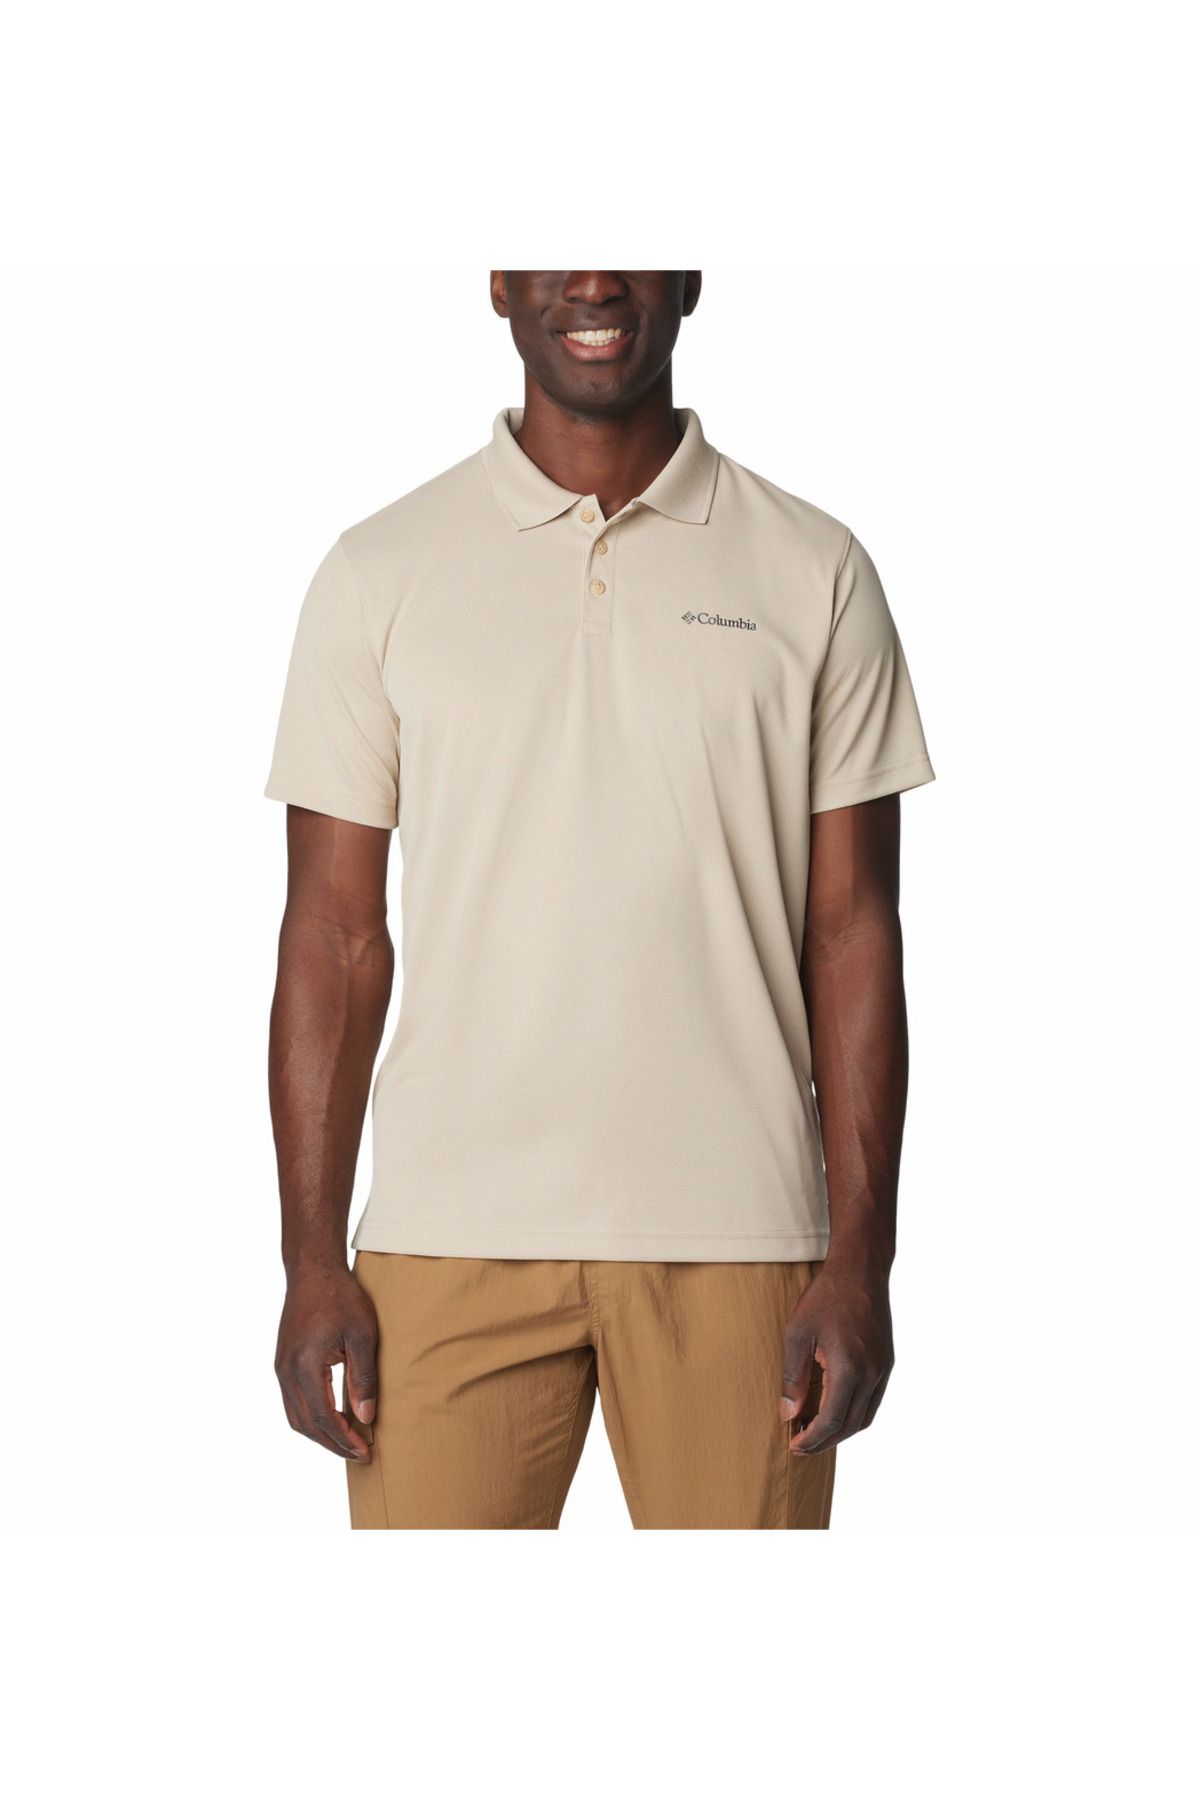 Columbia Utilizer Erkek Kısa Kollu Polo T-Shirt